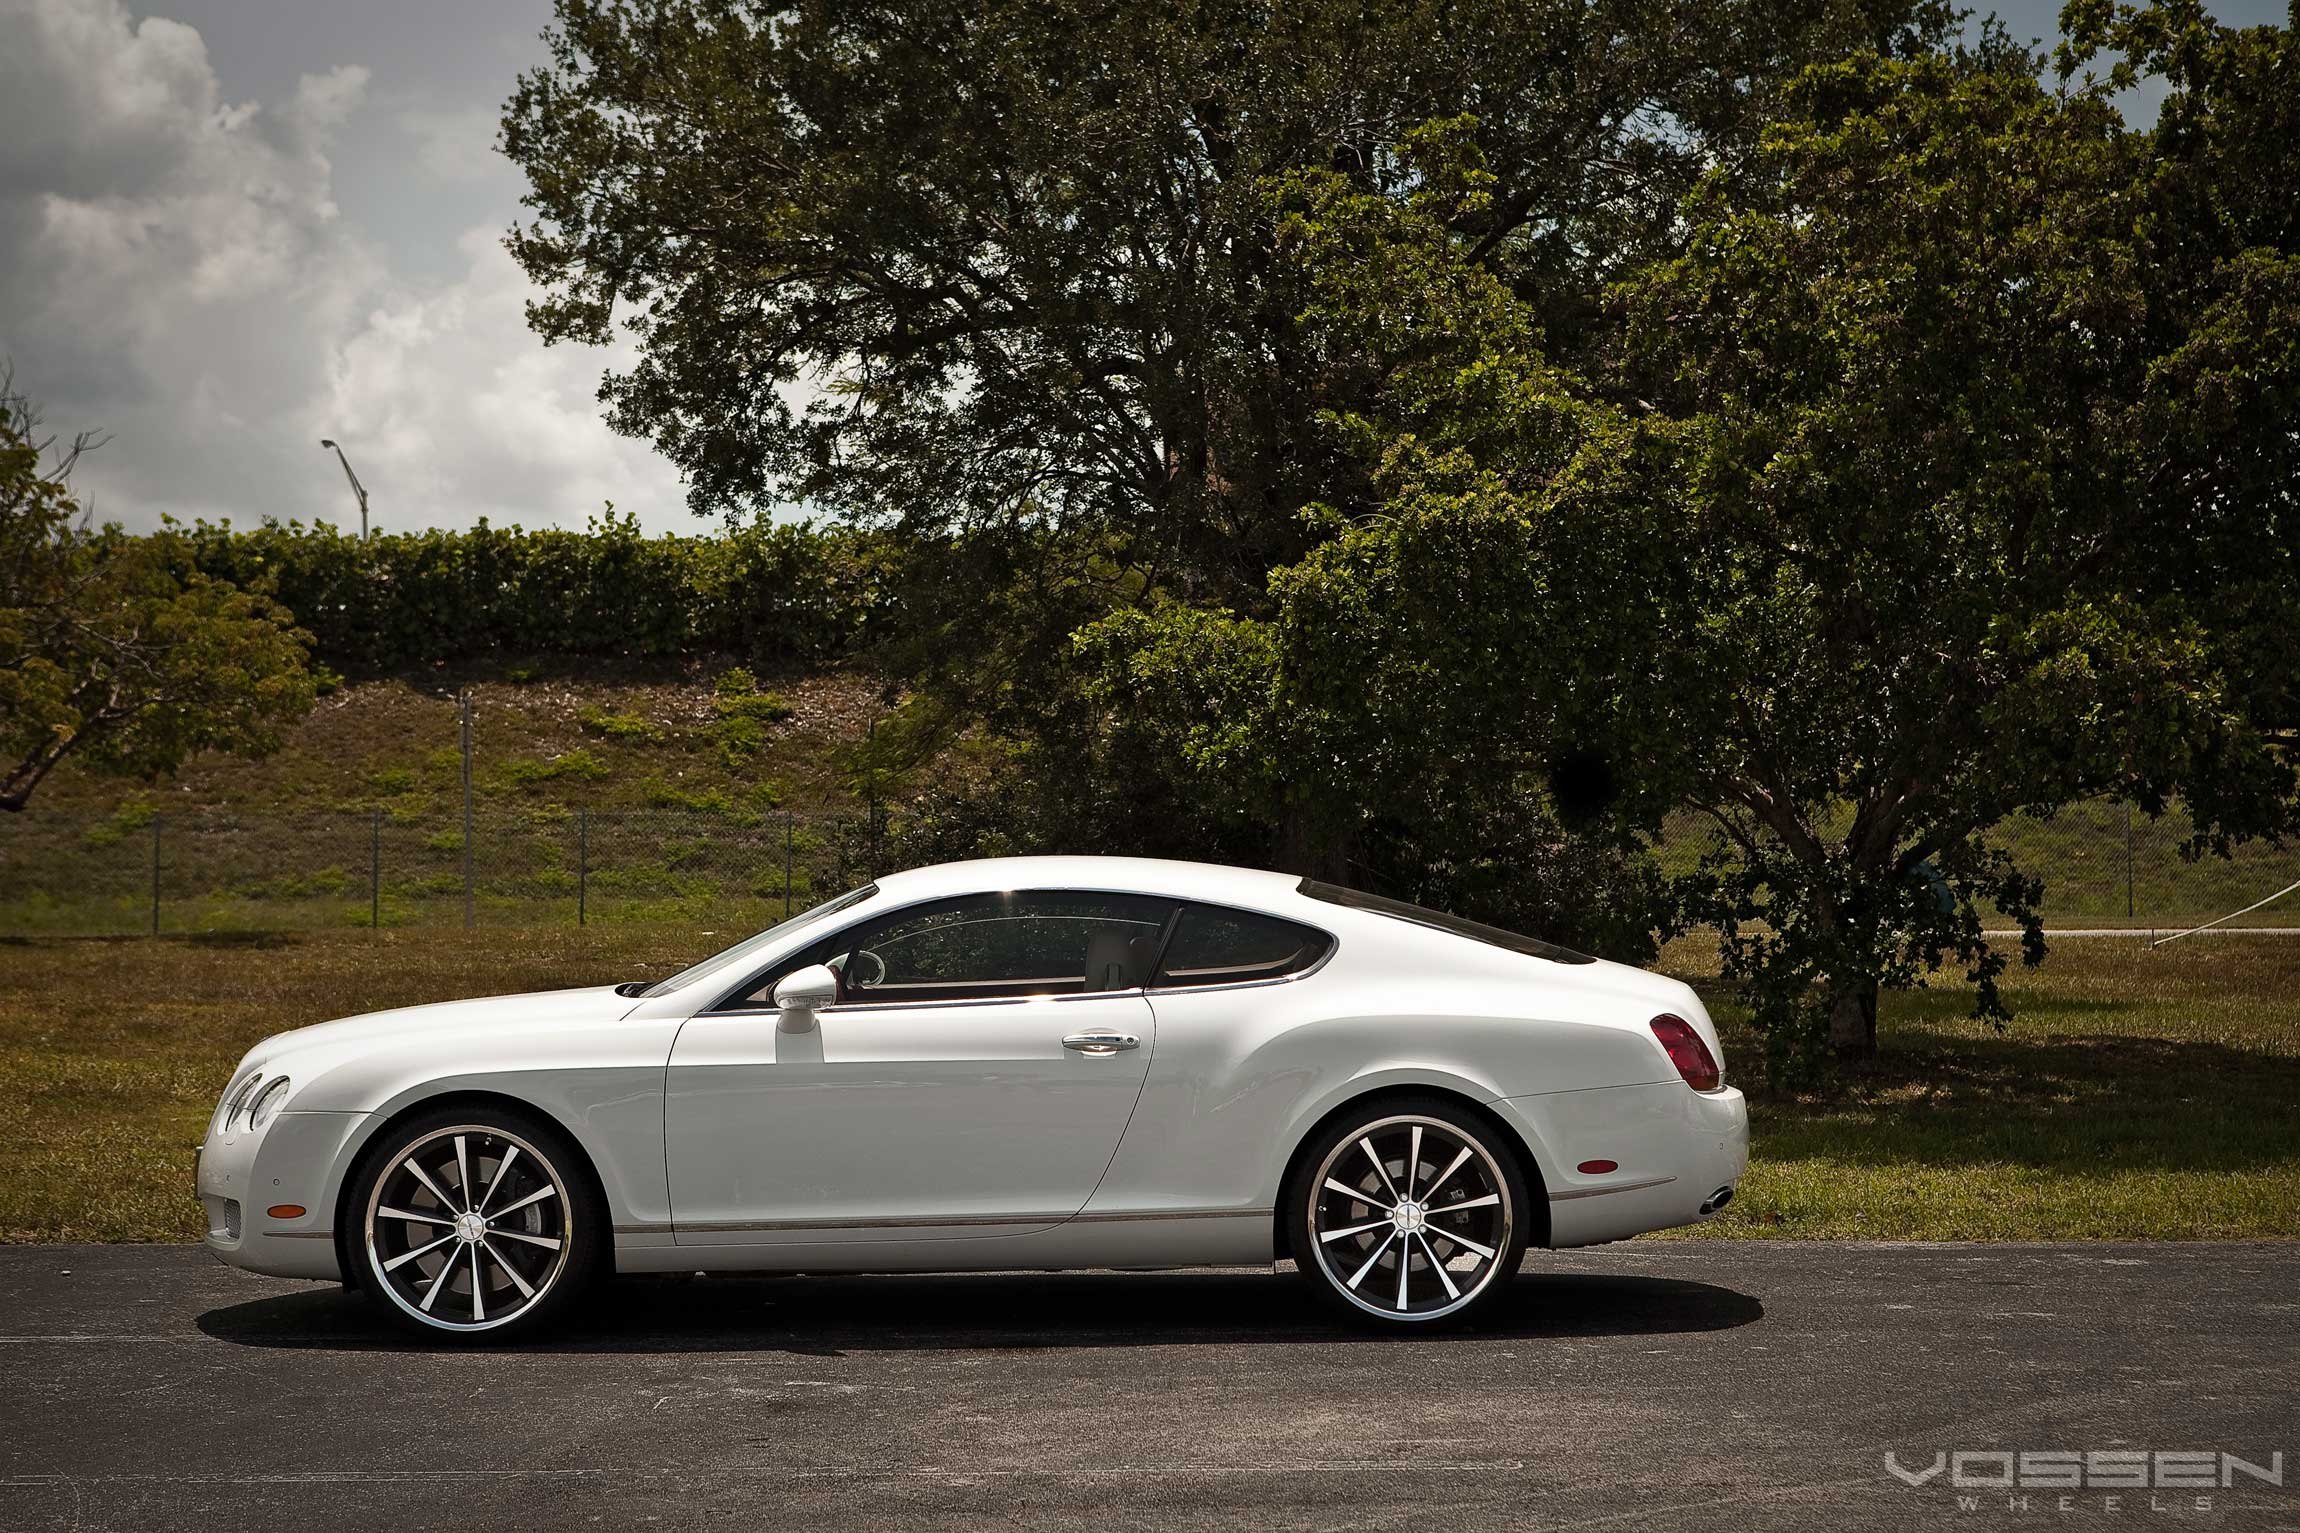 White Bentley Continental with Chrome Vossen Rims - Photo by Vossen